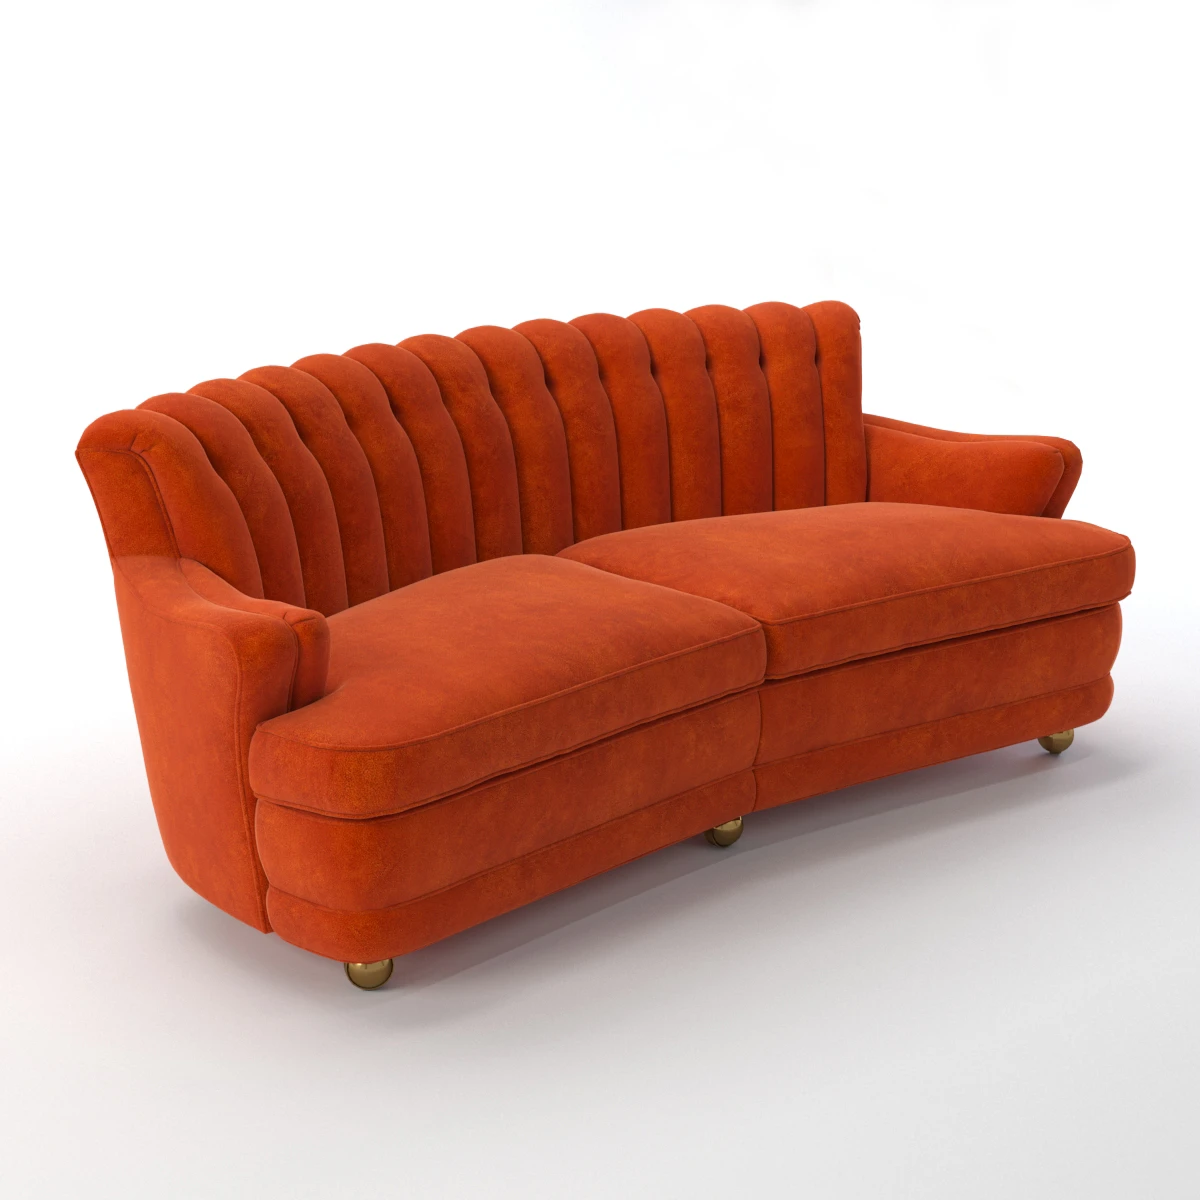 Vintage Couch Furniture Retro Orange Couch 3D Model_01